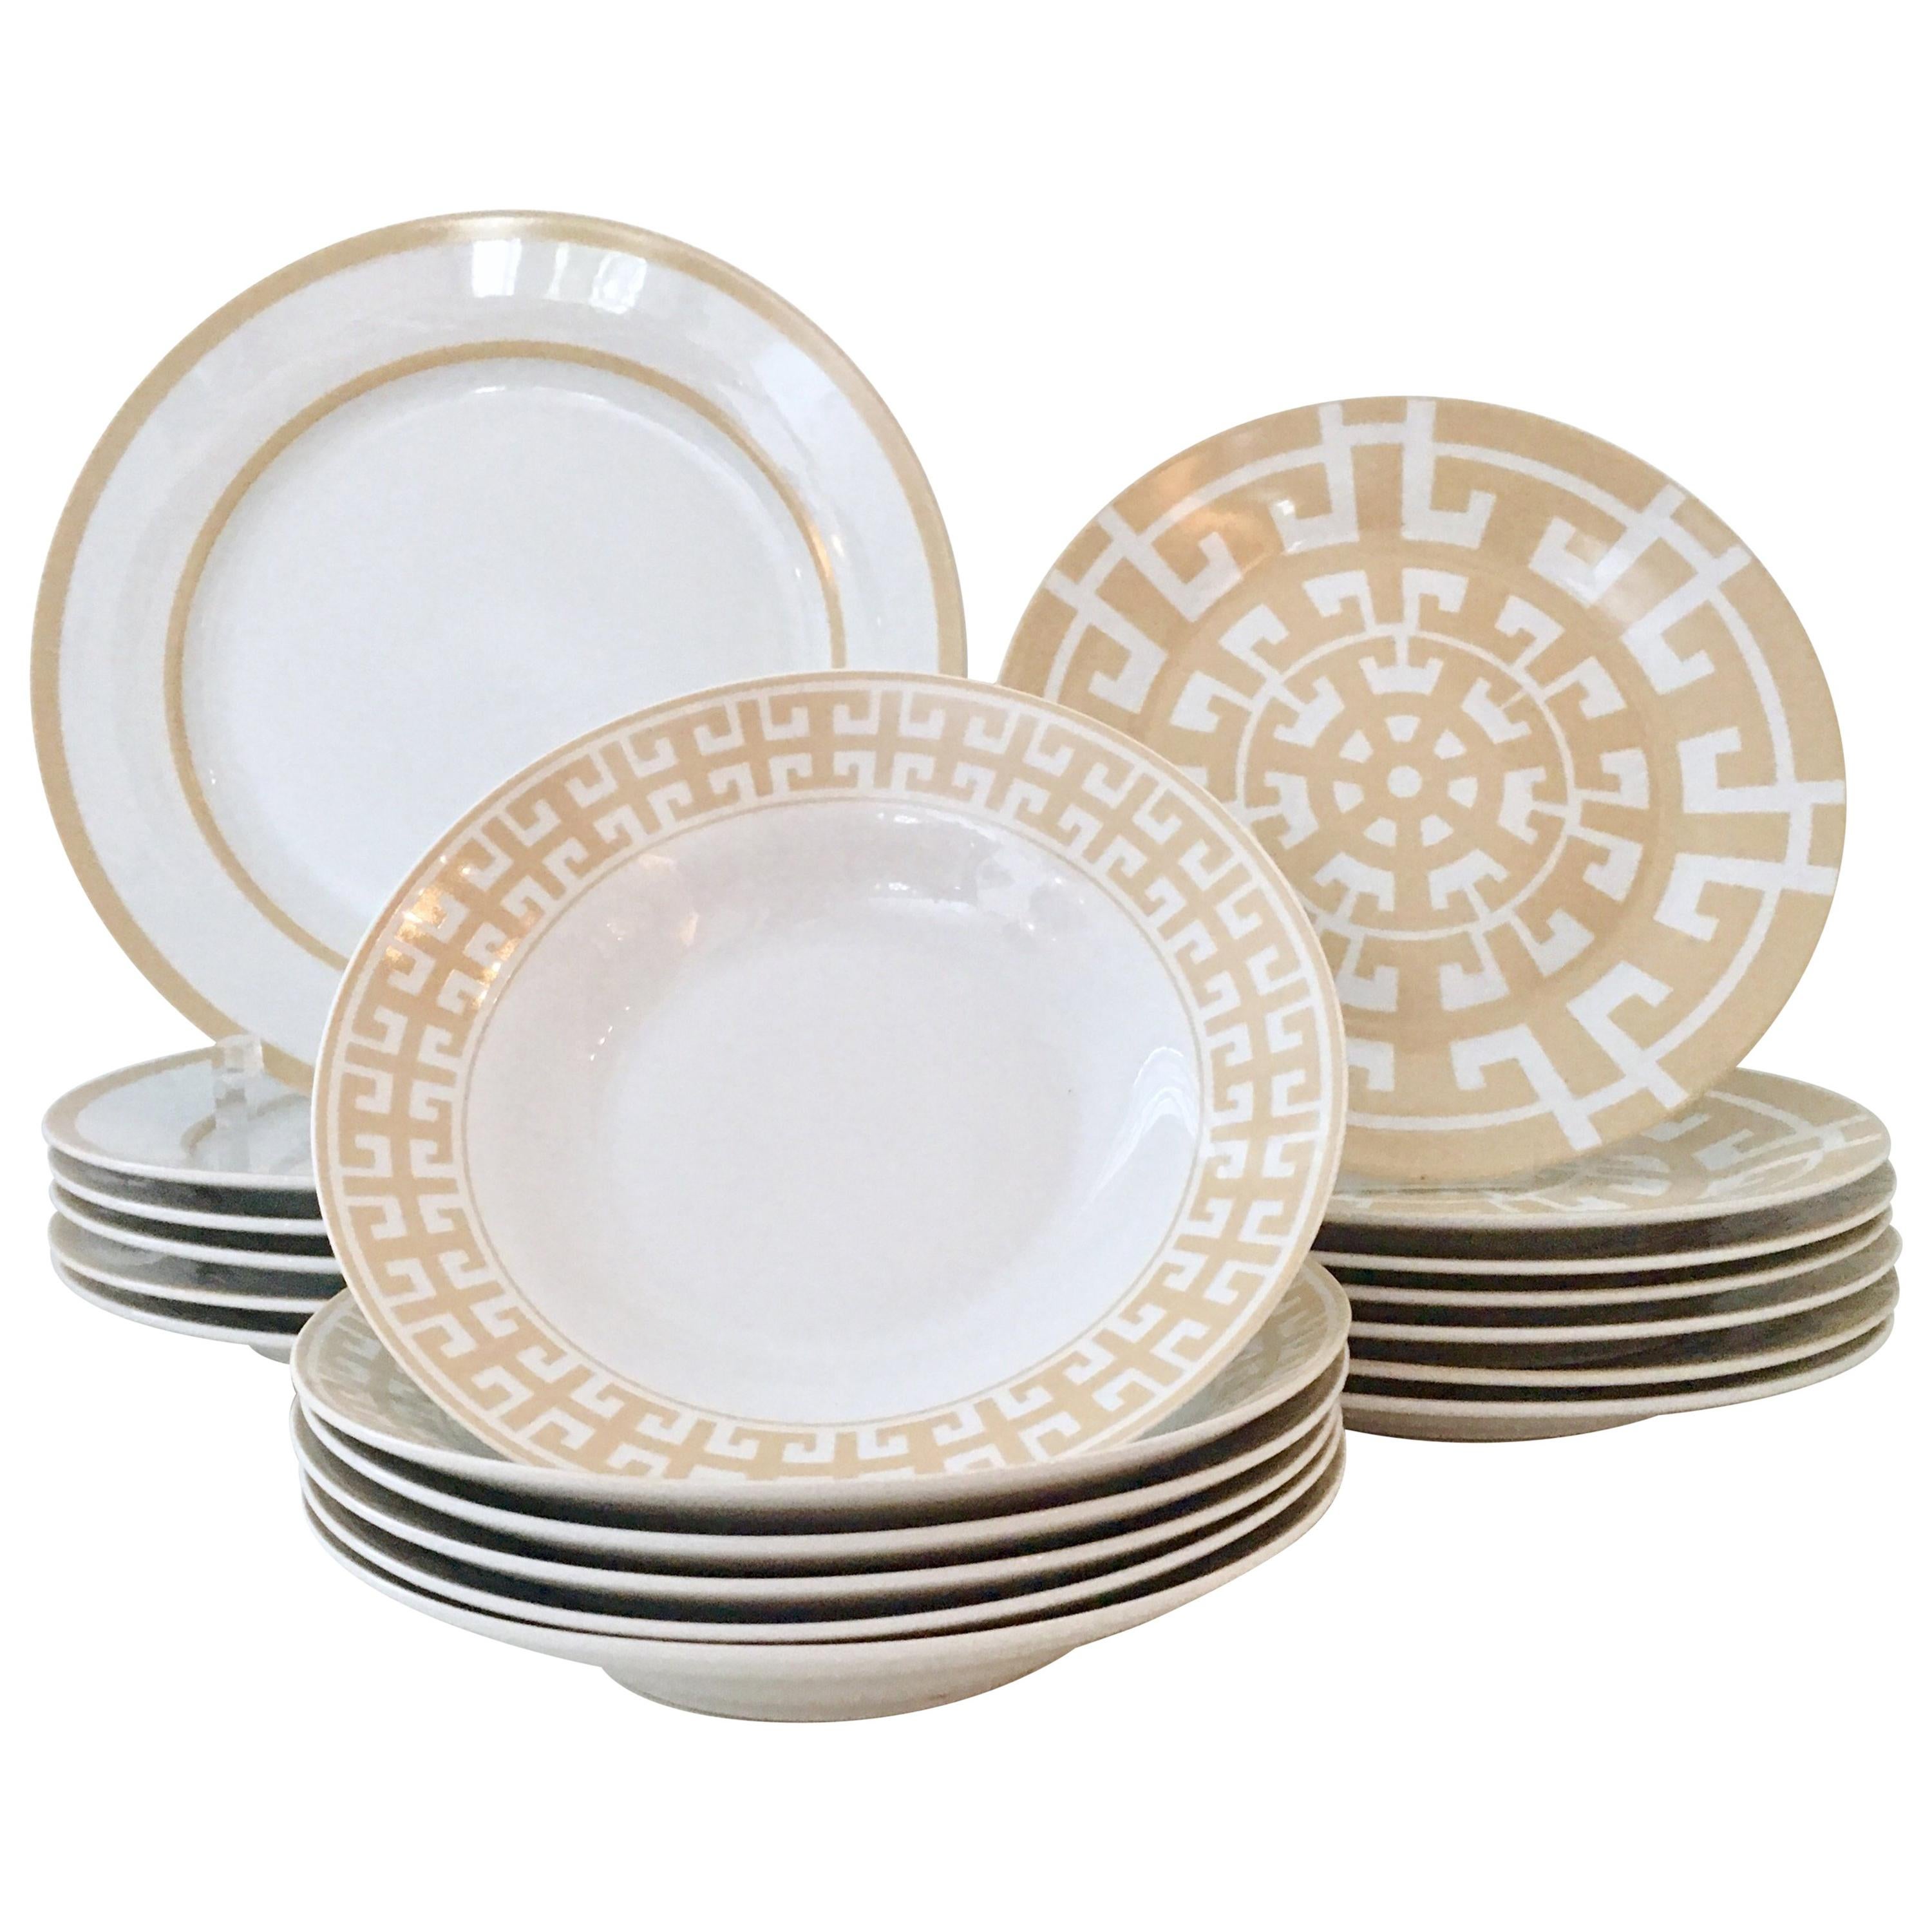 Hermes Dinnerware - For Sale on 1stDibs | hermes dinnerware sale 